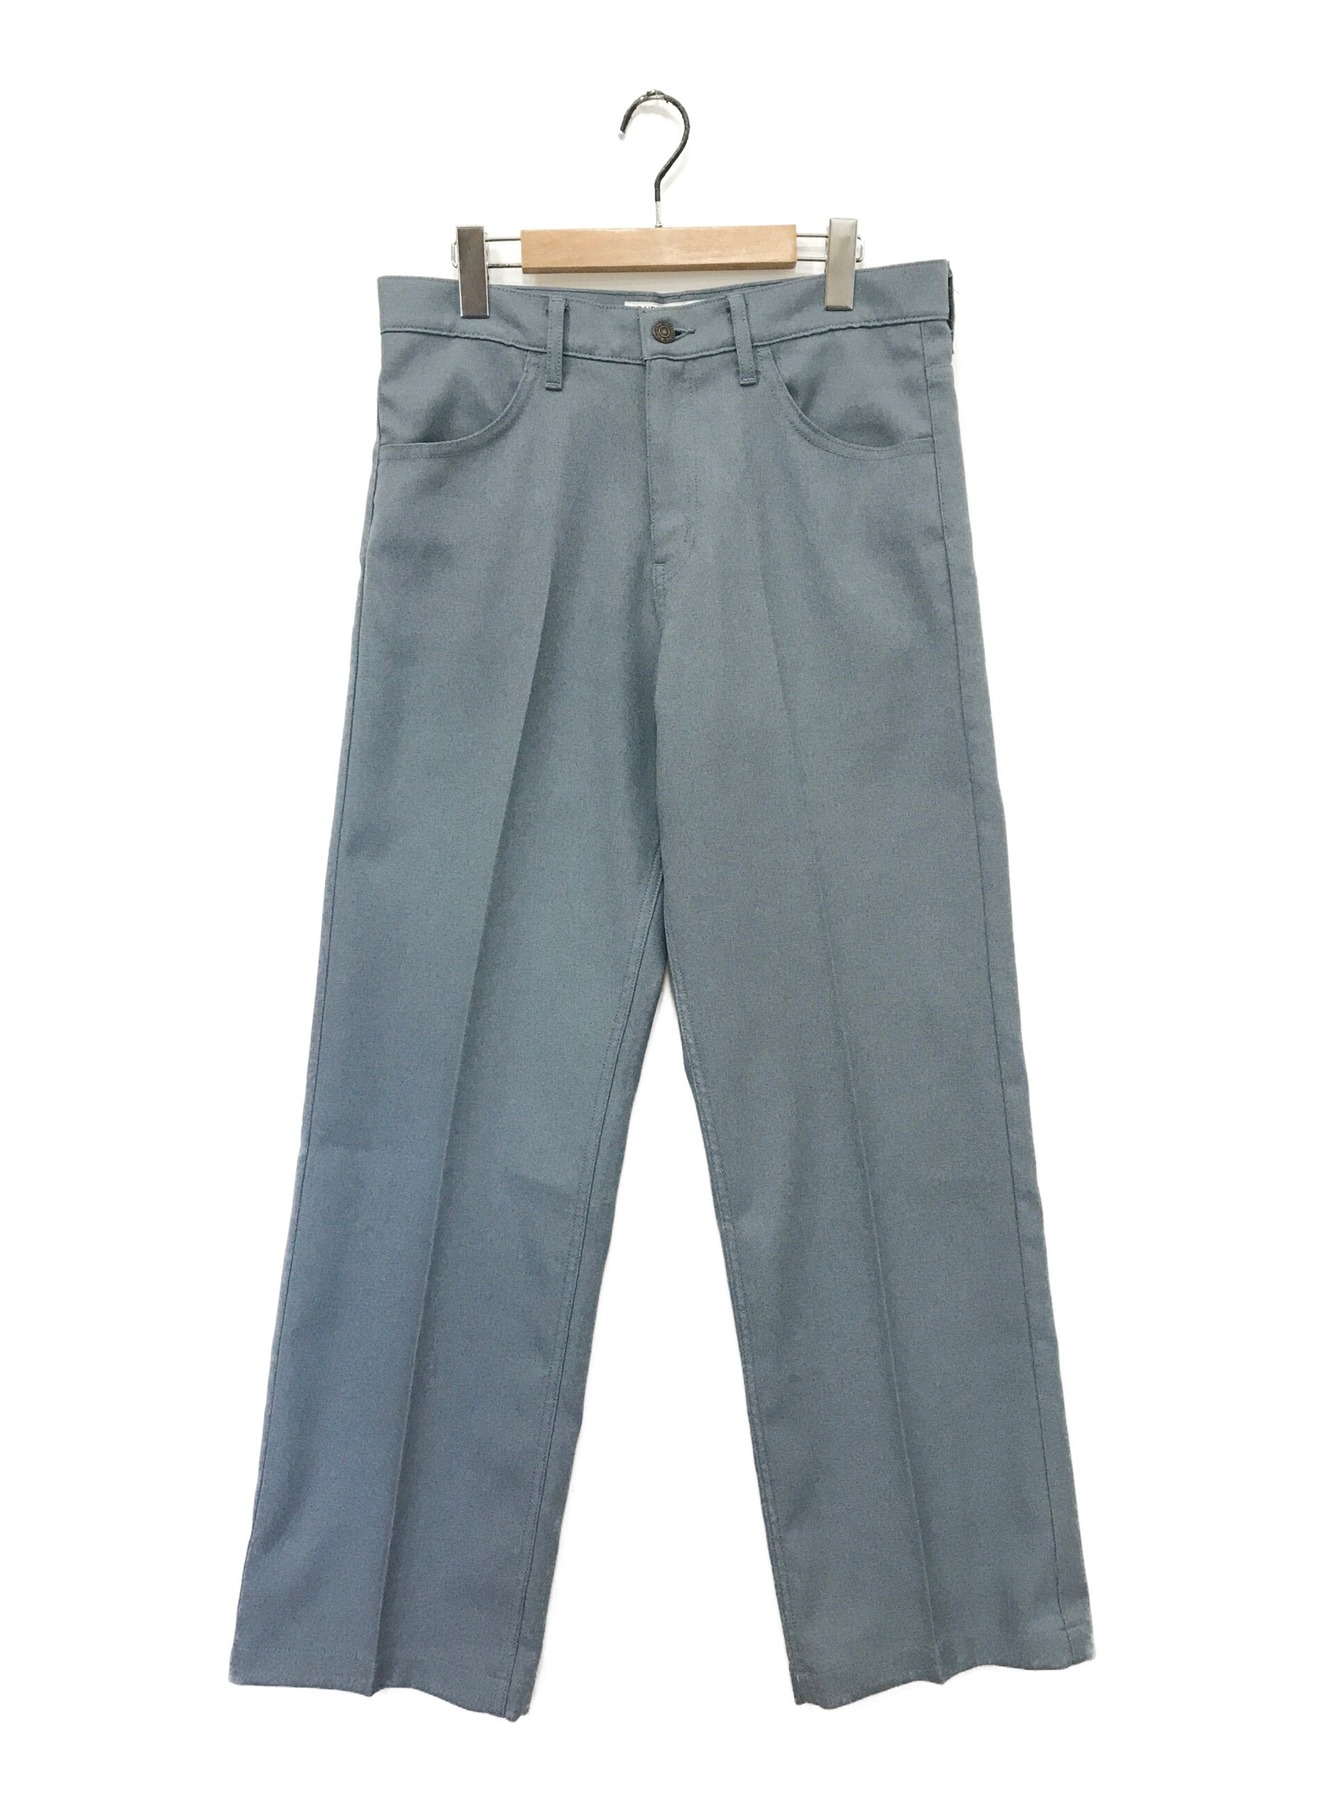 DAIRIKU (ダイリク) Flasher Pressed Pants ブルー サイズ:31